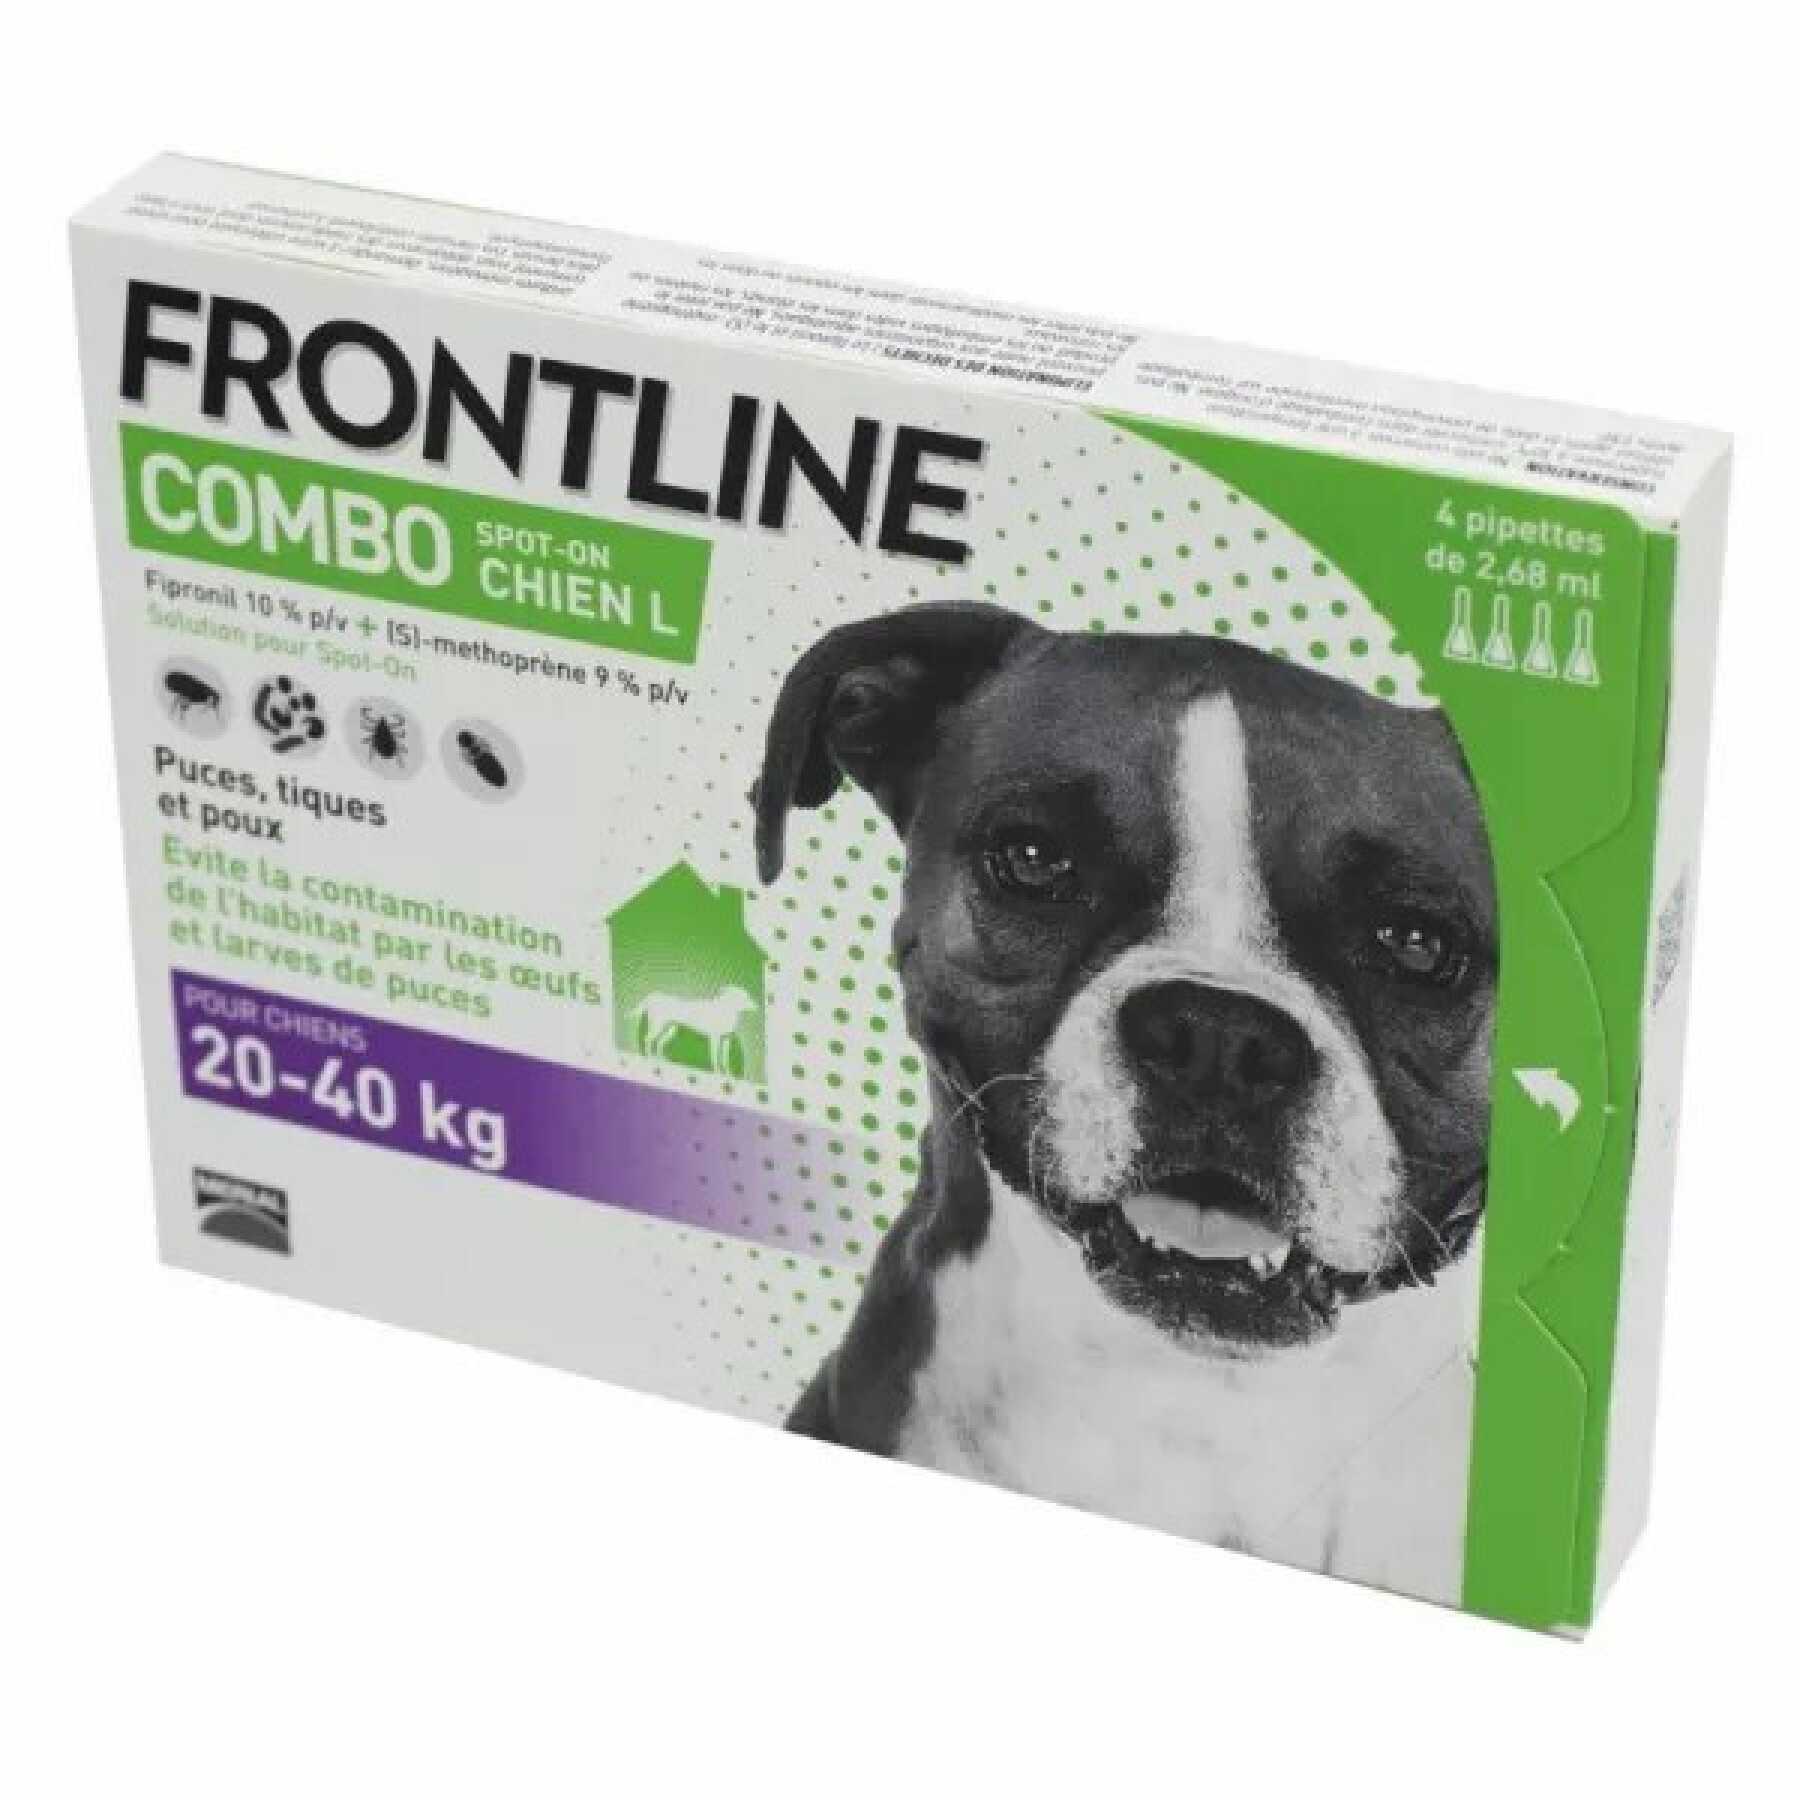 Pest control for dogs Frontline de 20/40 kg Combo Spot On (x4)